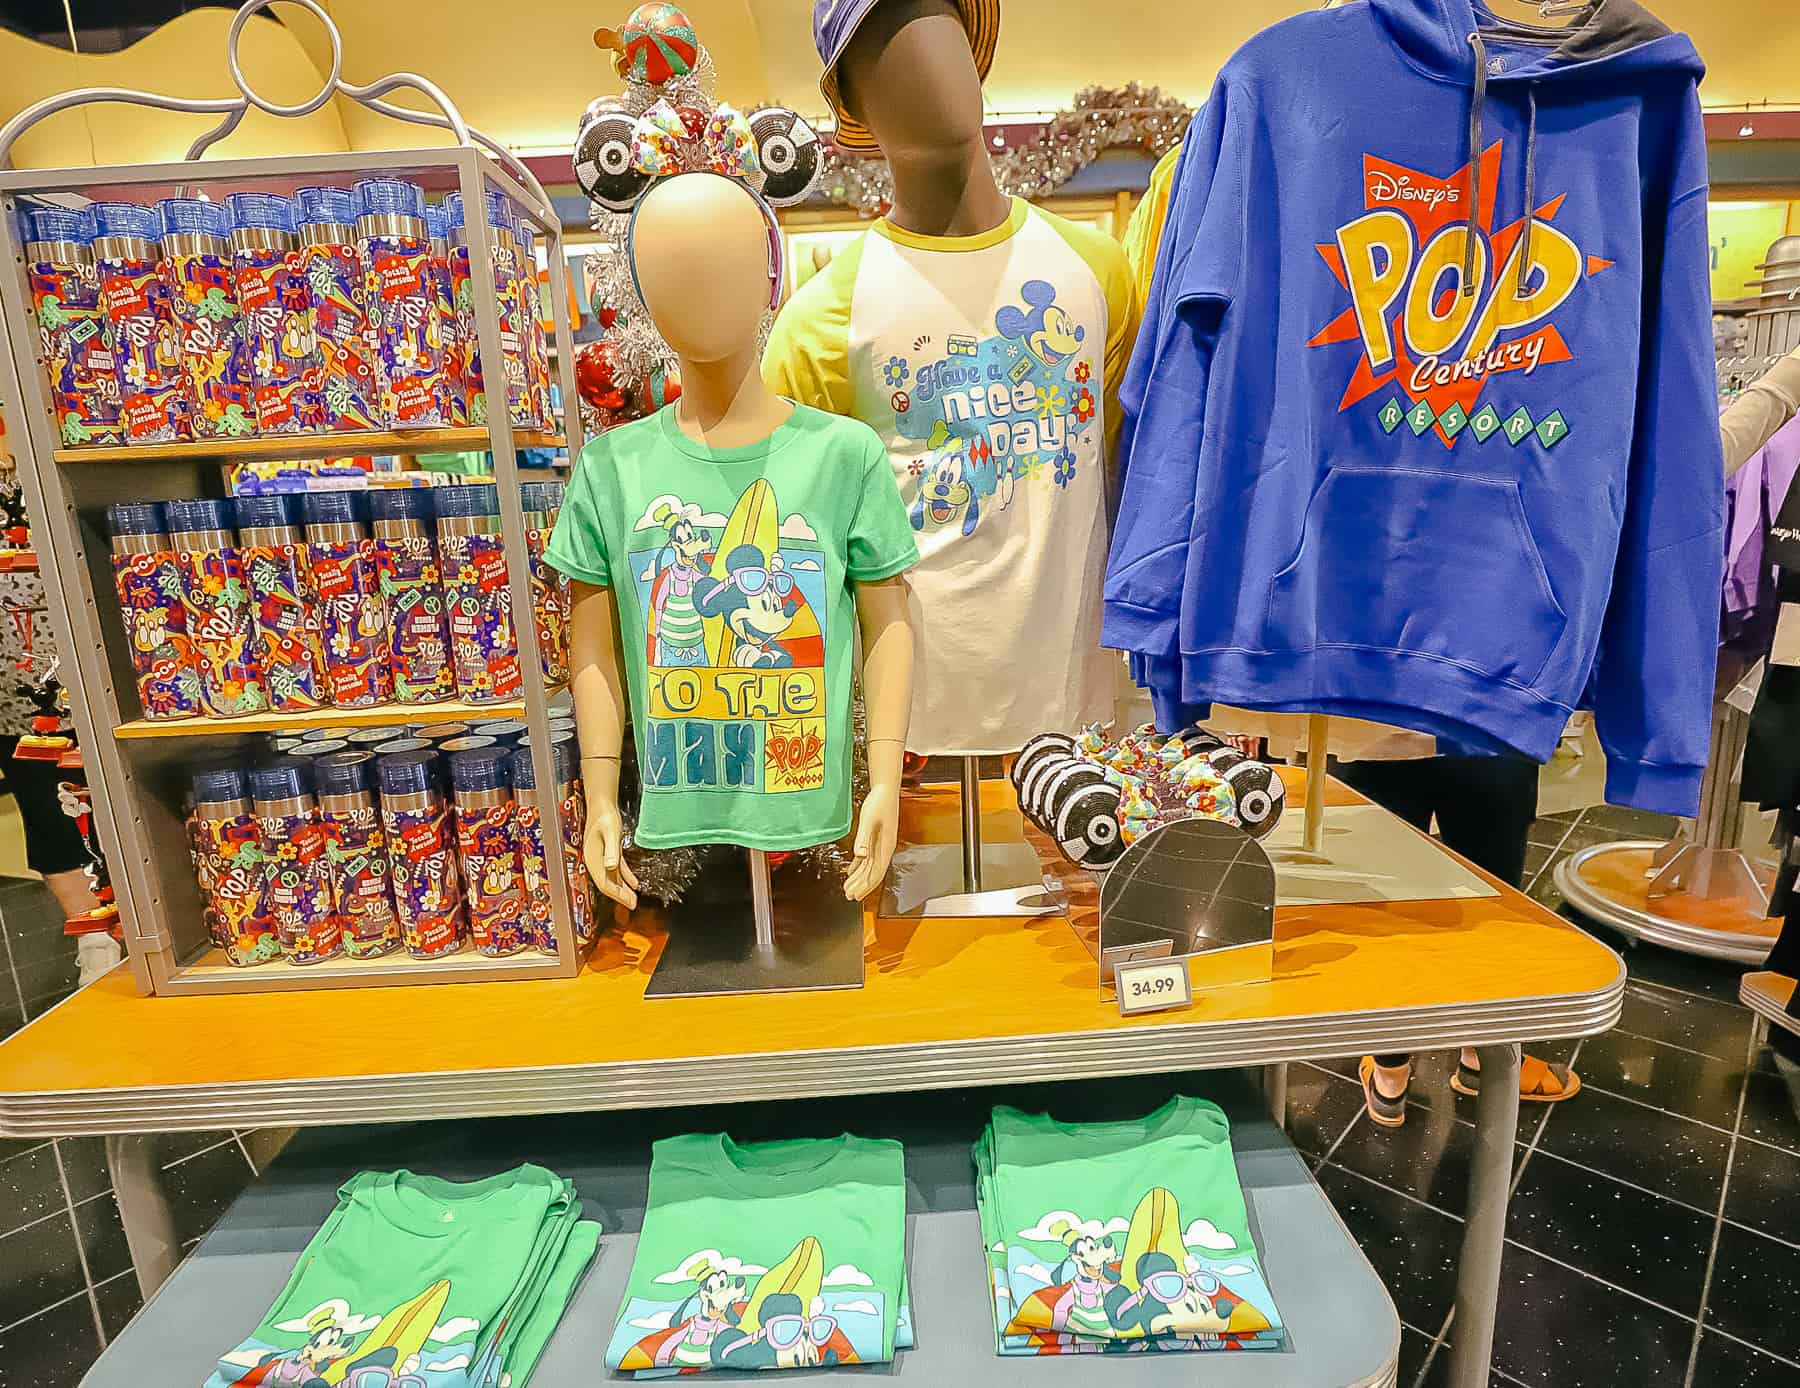 a display of resort-branded merchandise for Disney's Pop Century